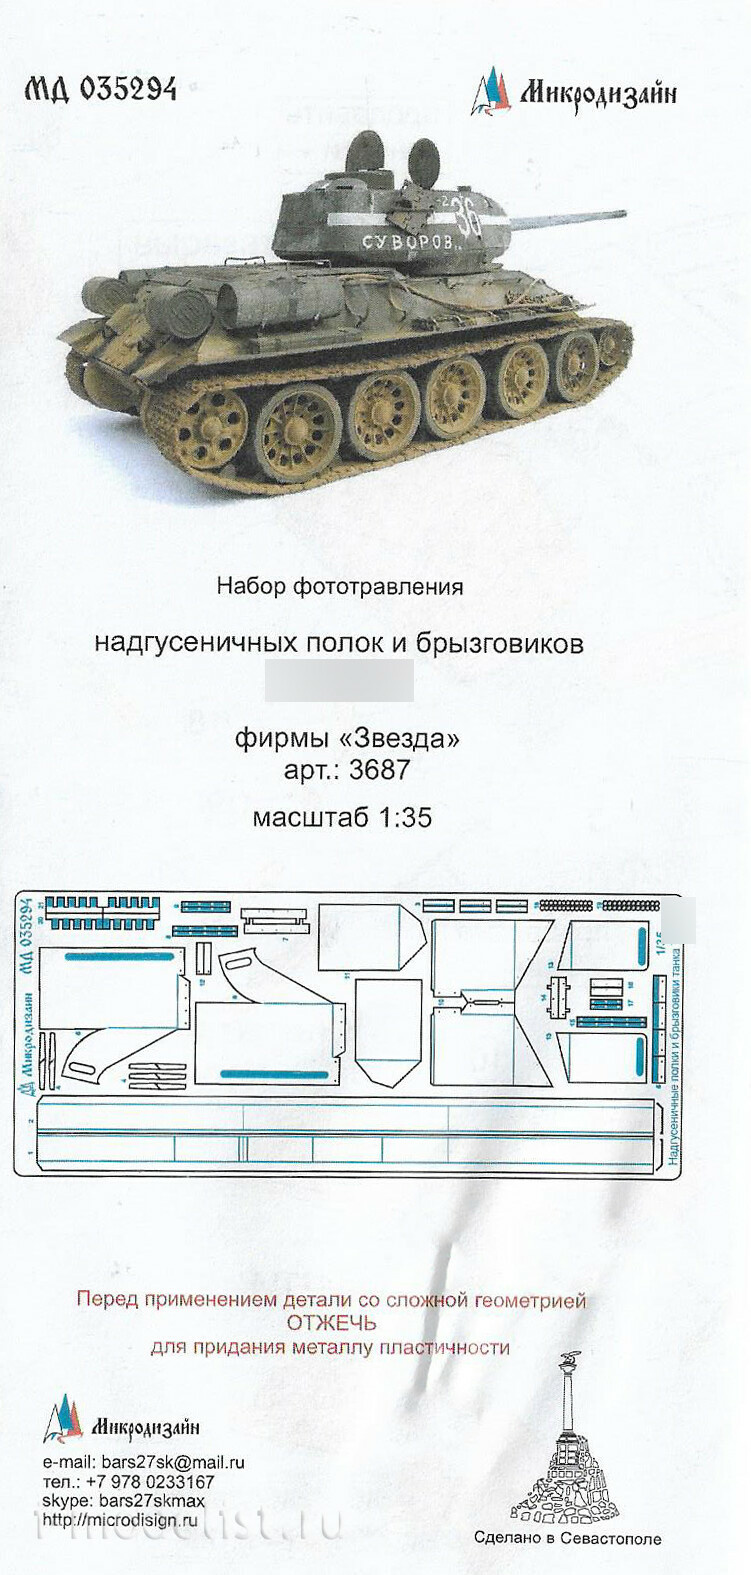 035294 Microdesign 1/35 Tank 34/85 Overhead Shelves from the Zvezda